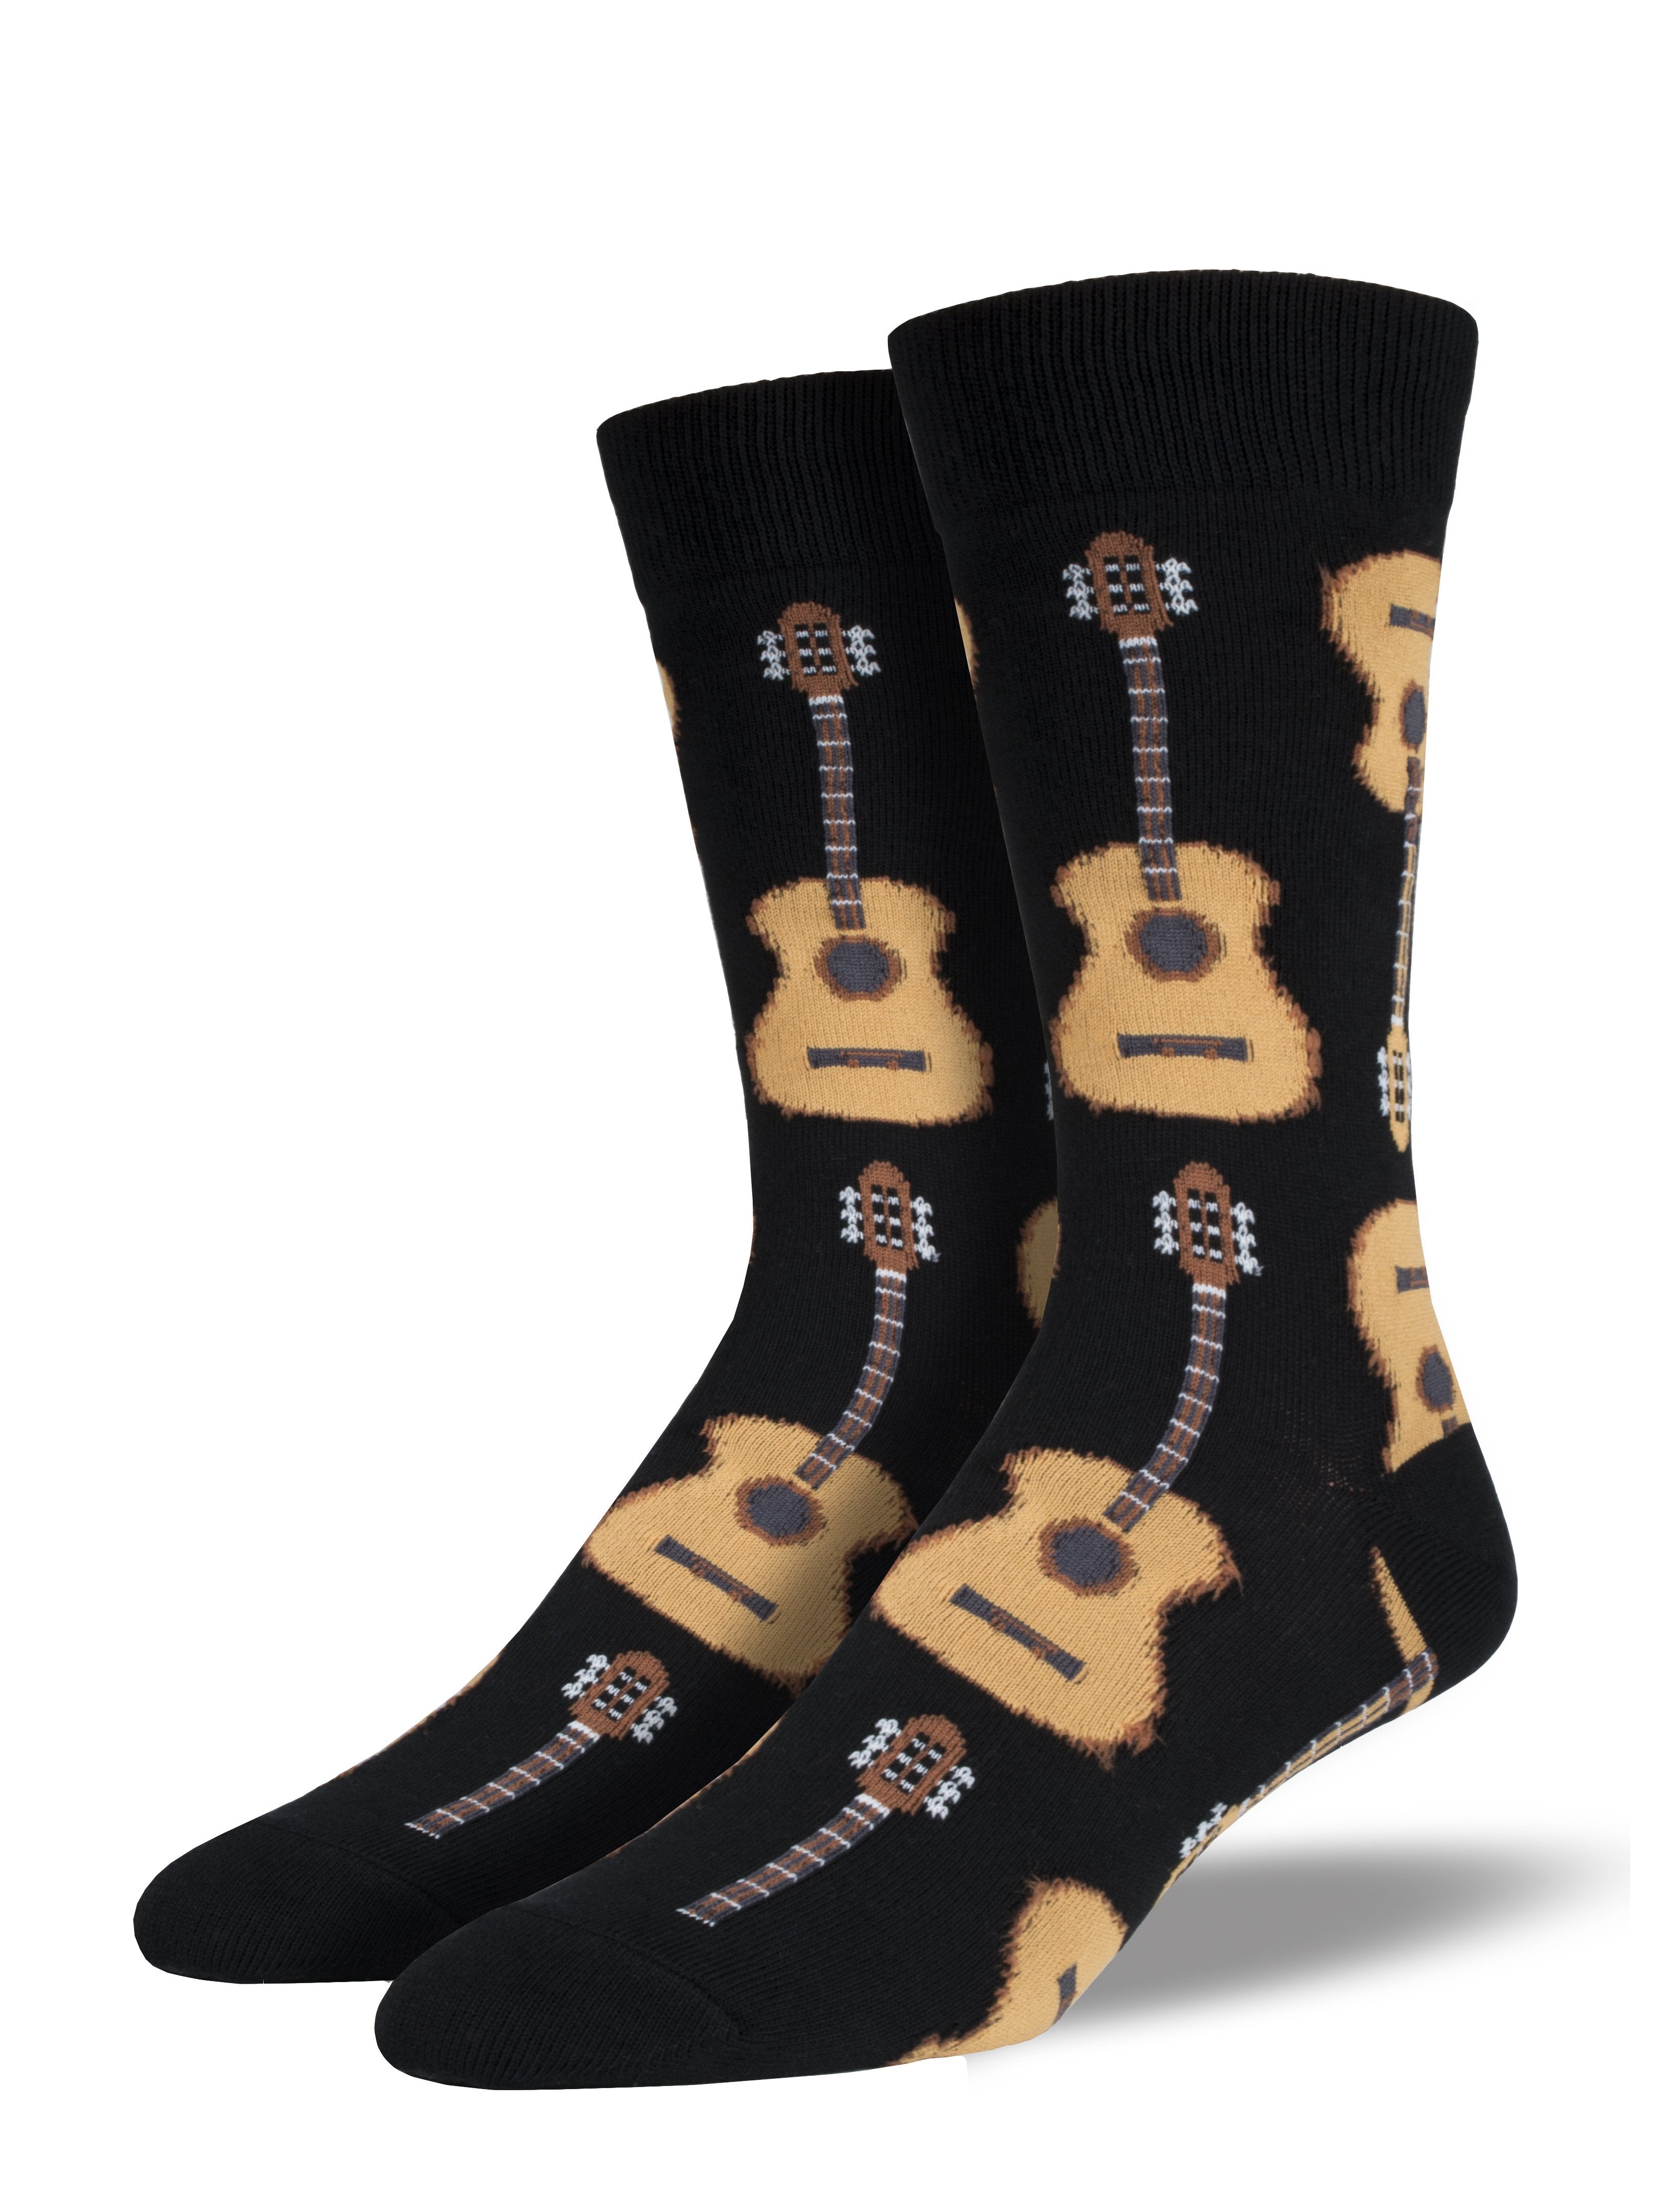 Men's "Acoustic Guitar" Socks